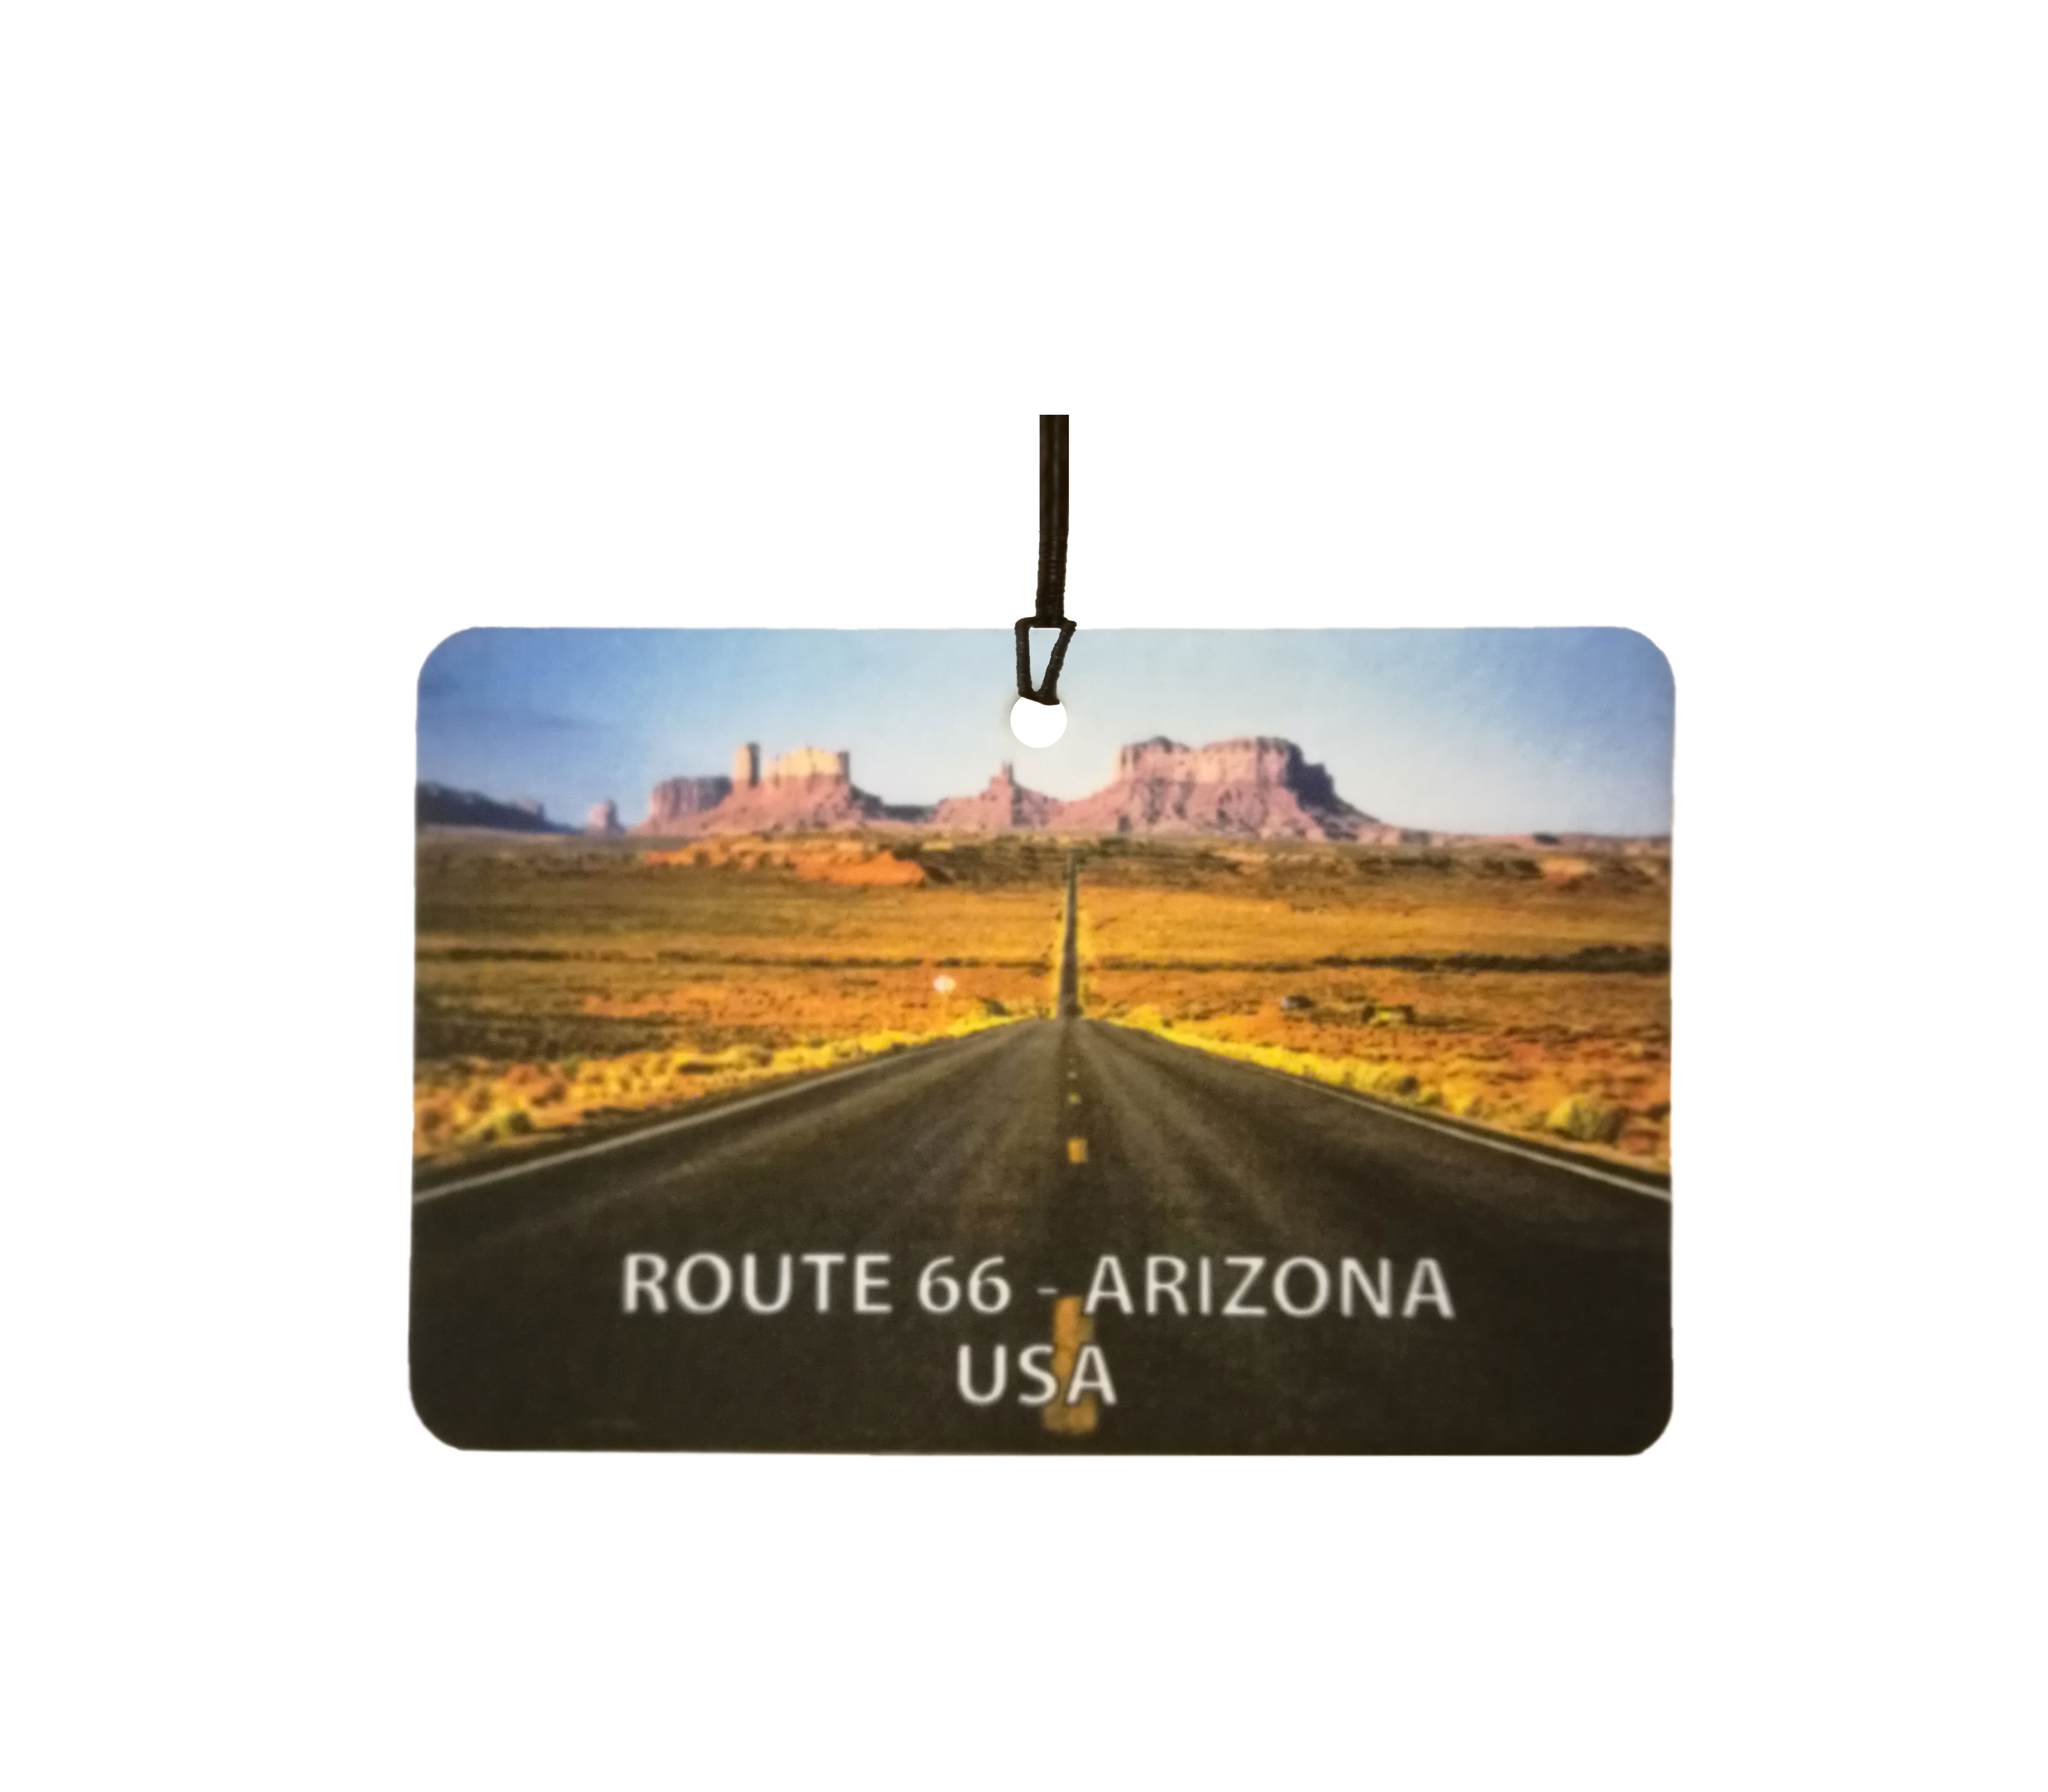 Route 66 - Arizona - USA